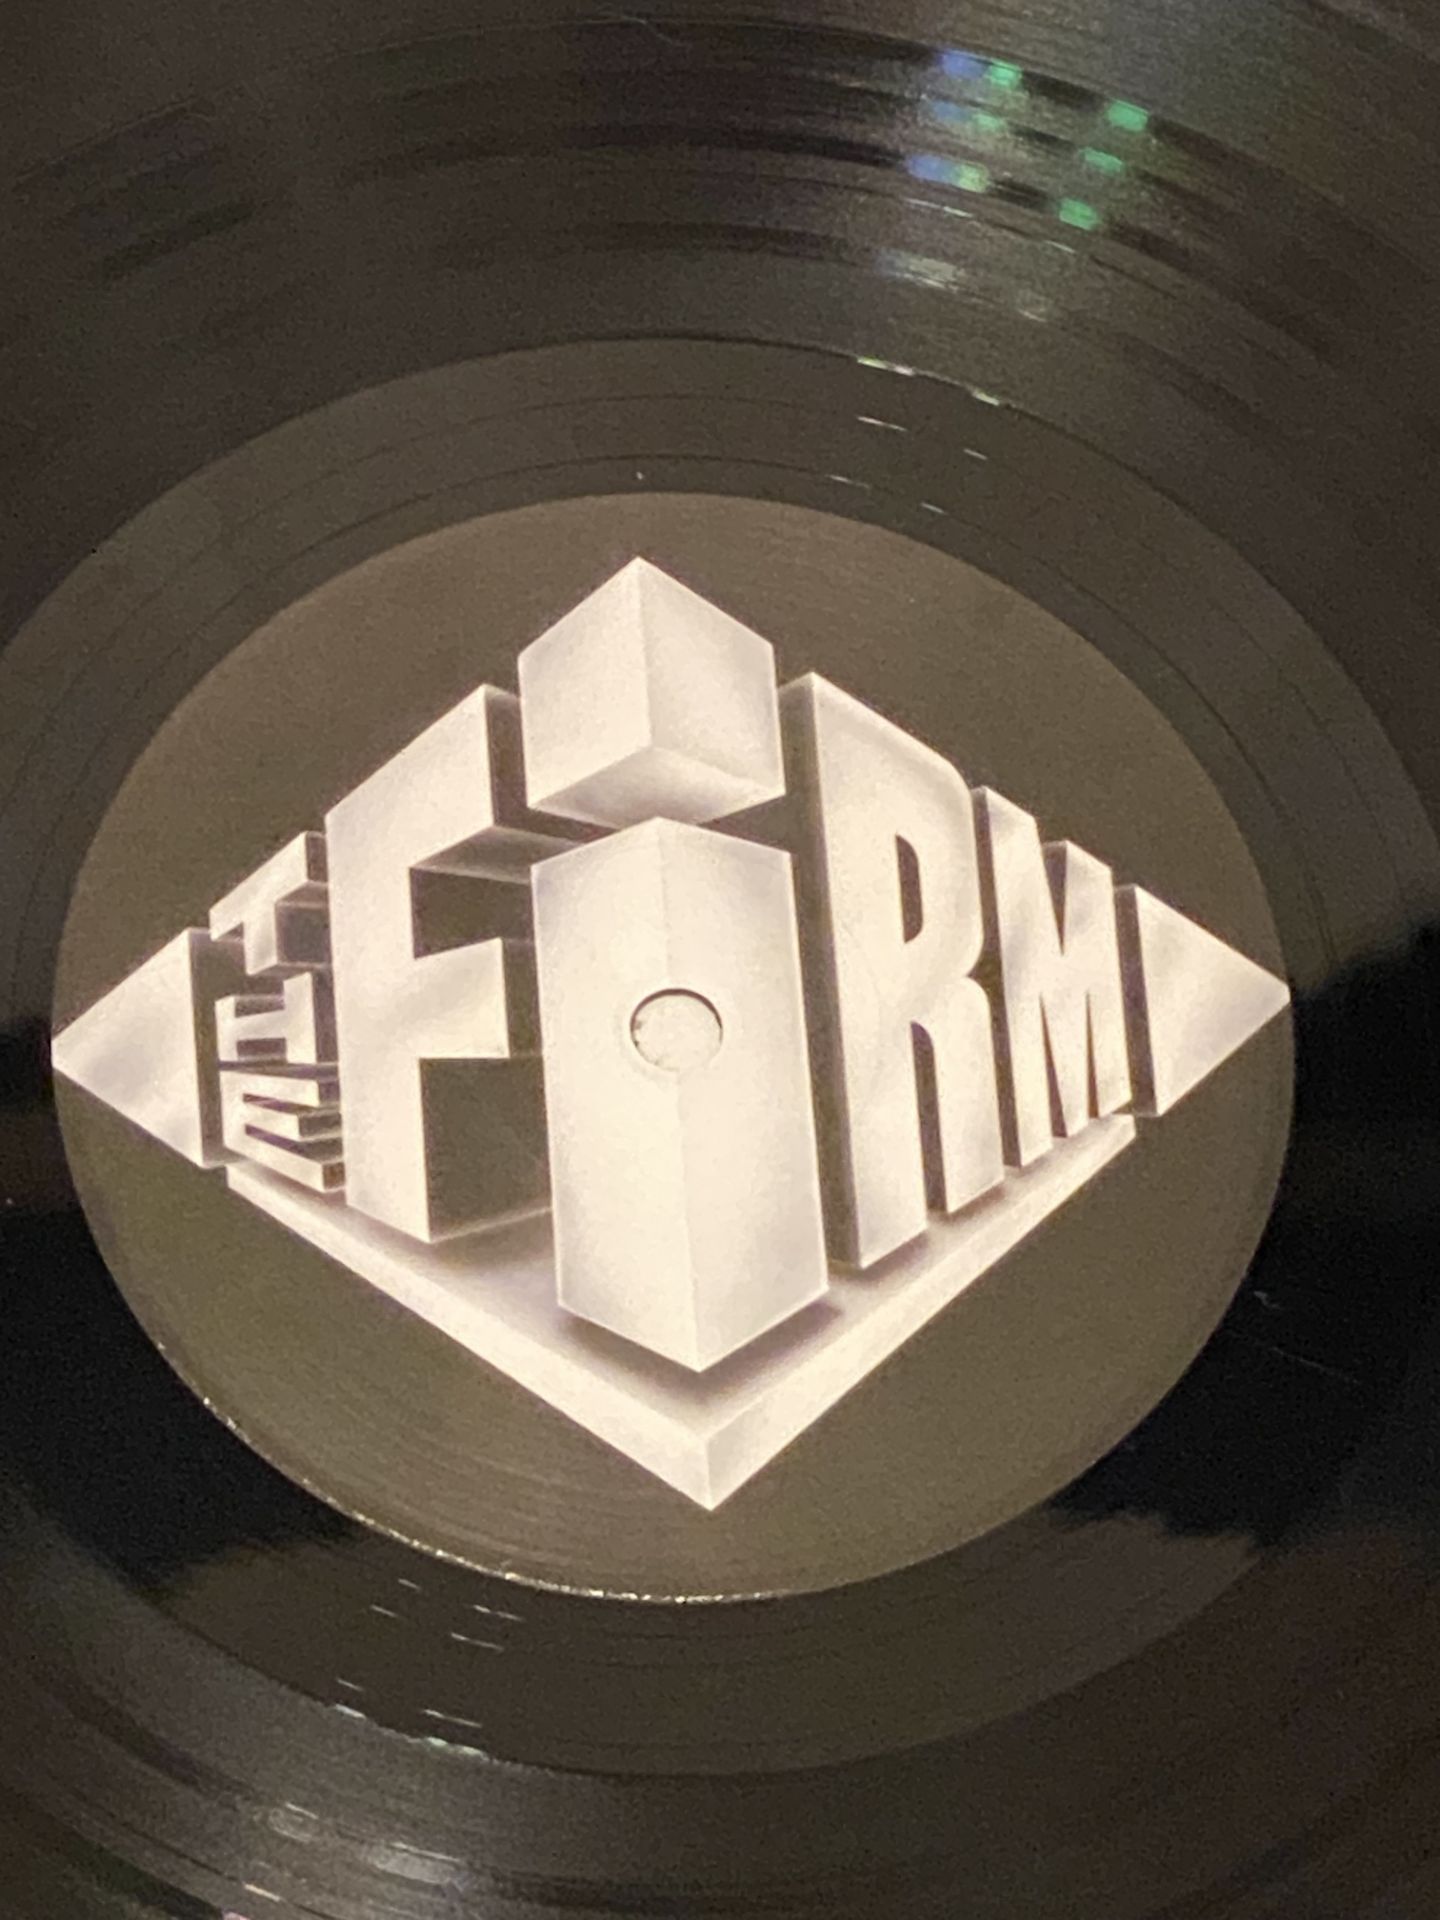 Kim Wilde Signed LP - Alan Partridge LP - The Firm LP. - Image 20 of 20